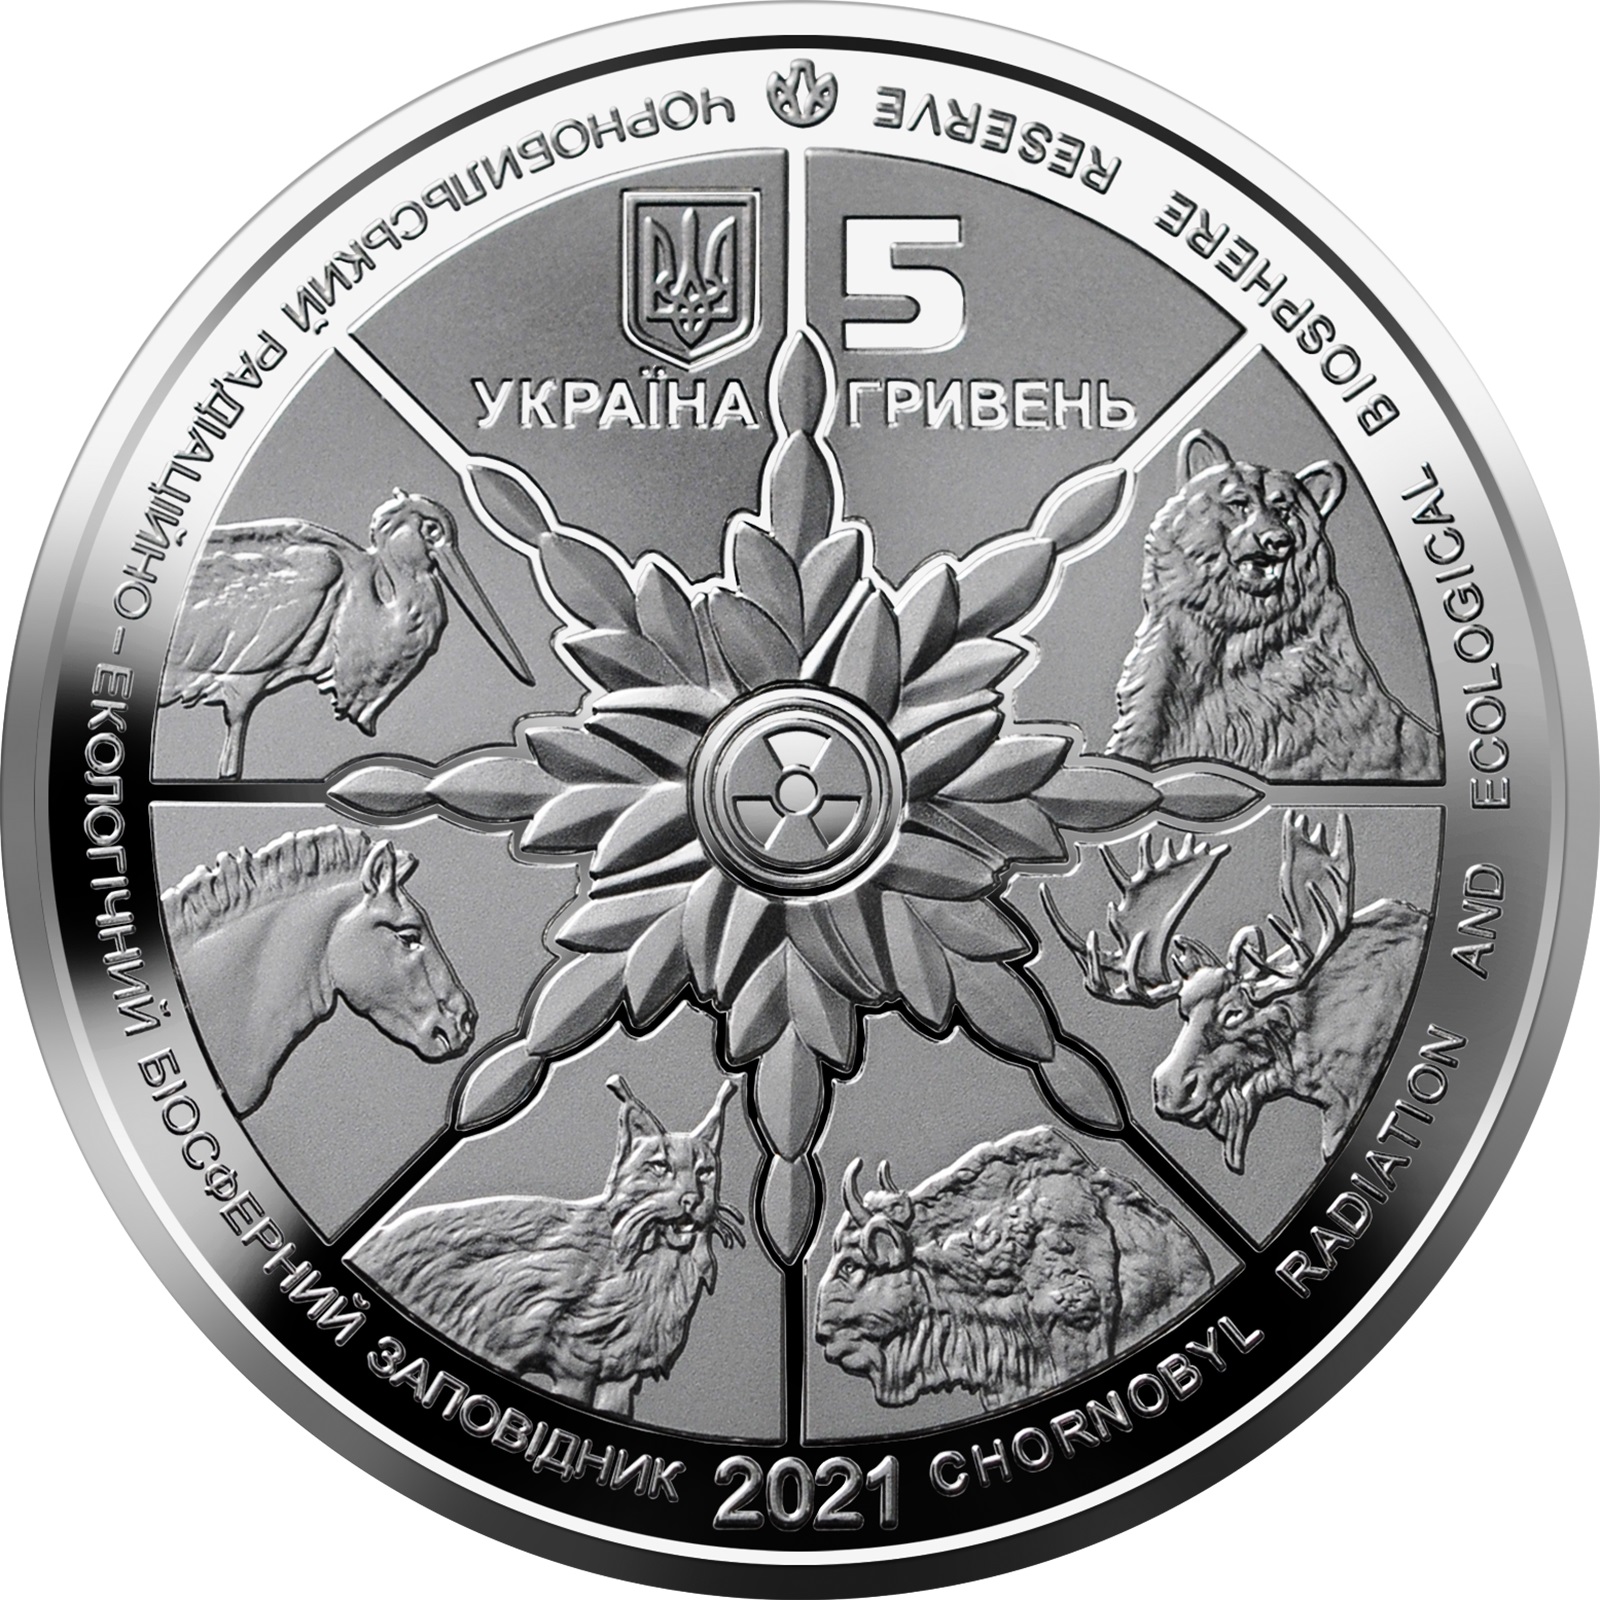 UA 5 Hryvnias 2021 National Bank of Ukraine logo